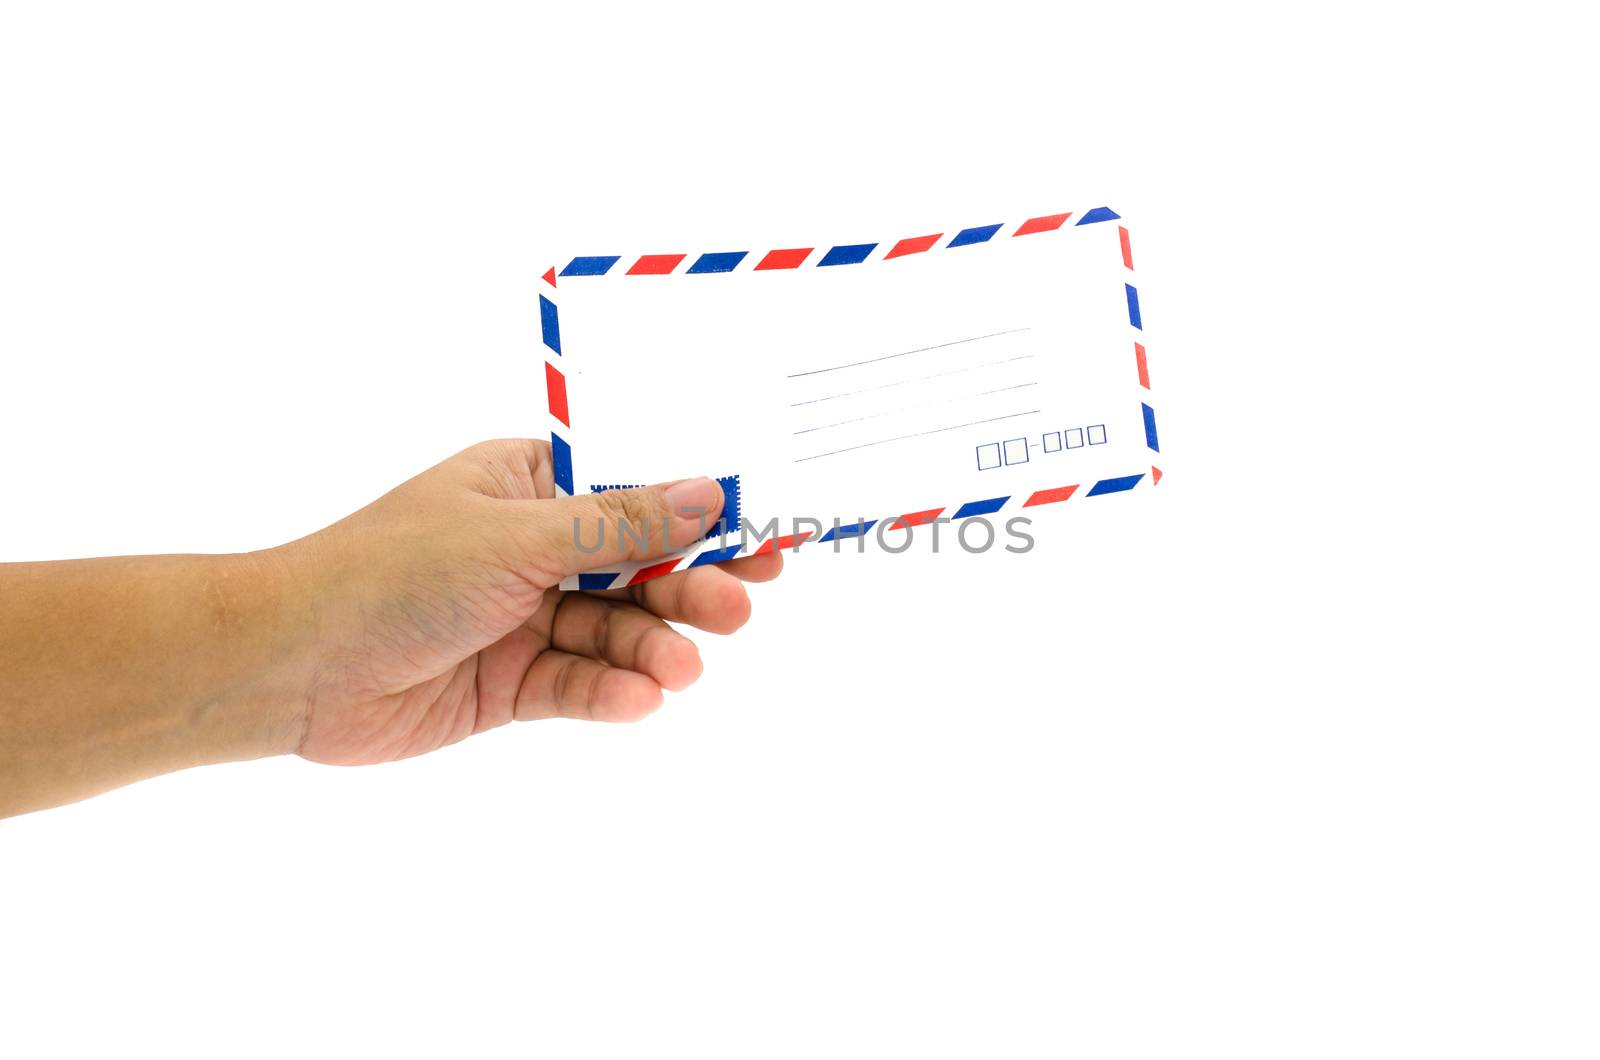 Handle the envelope